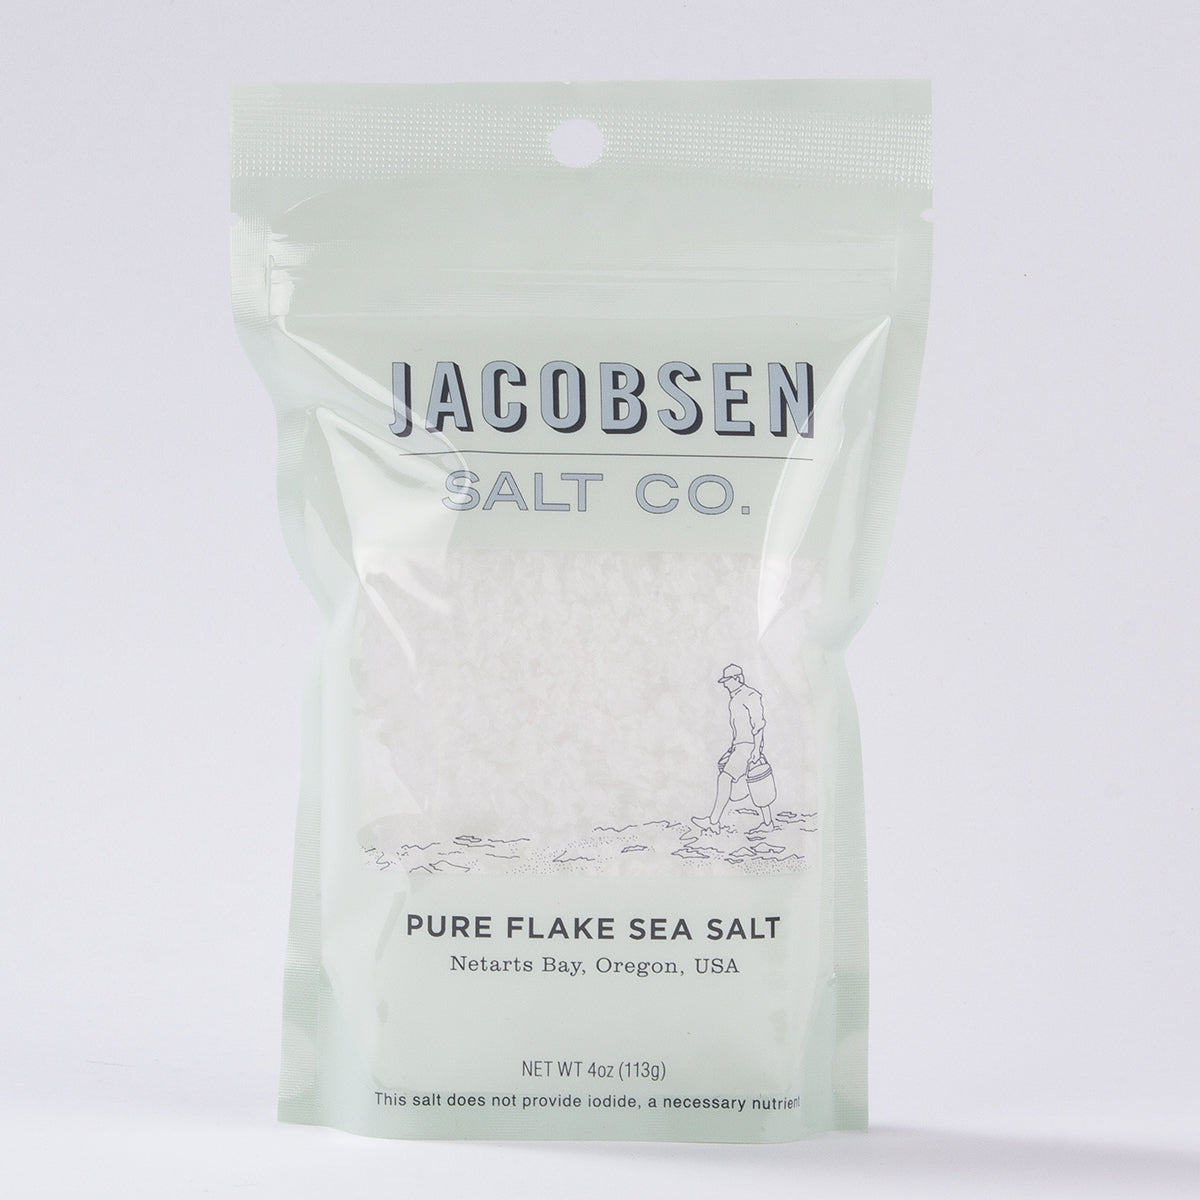 Jacobsen Salt Co Salts at General Store